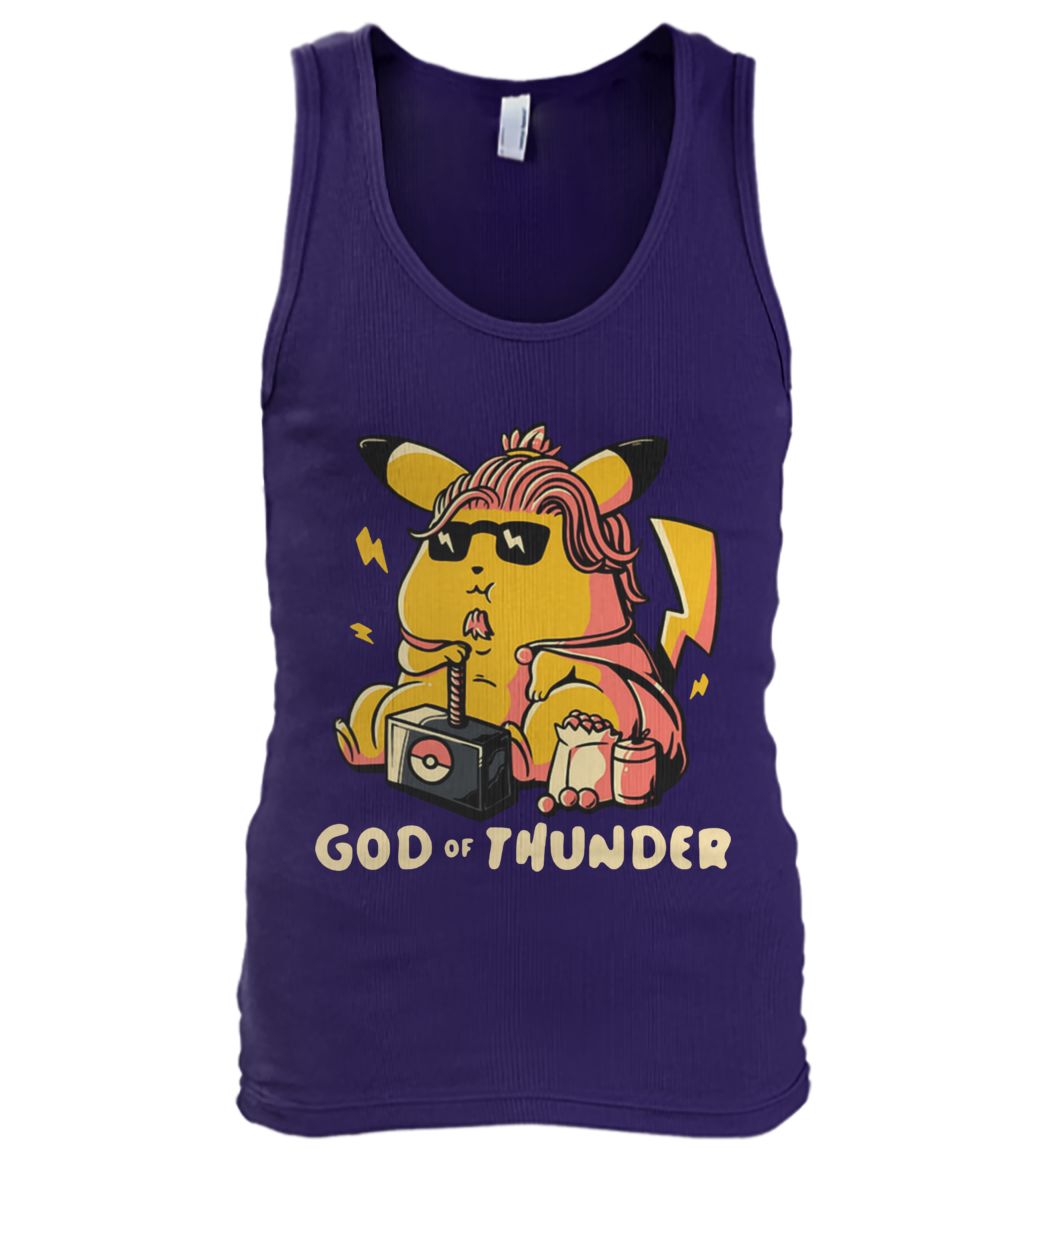 Thor style pikachu the god of thunder men's tank top